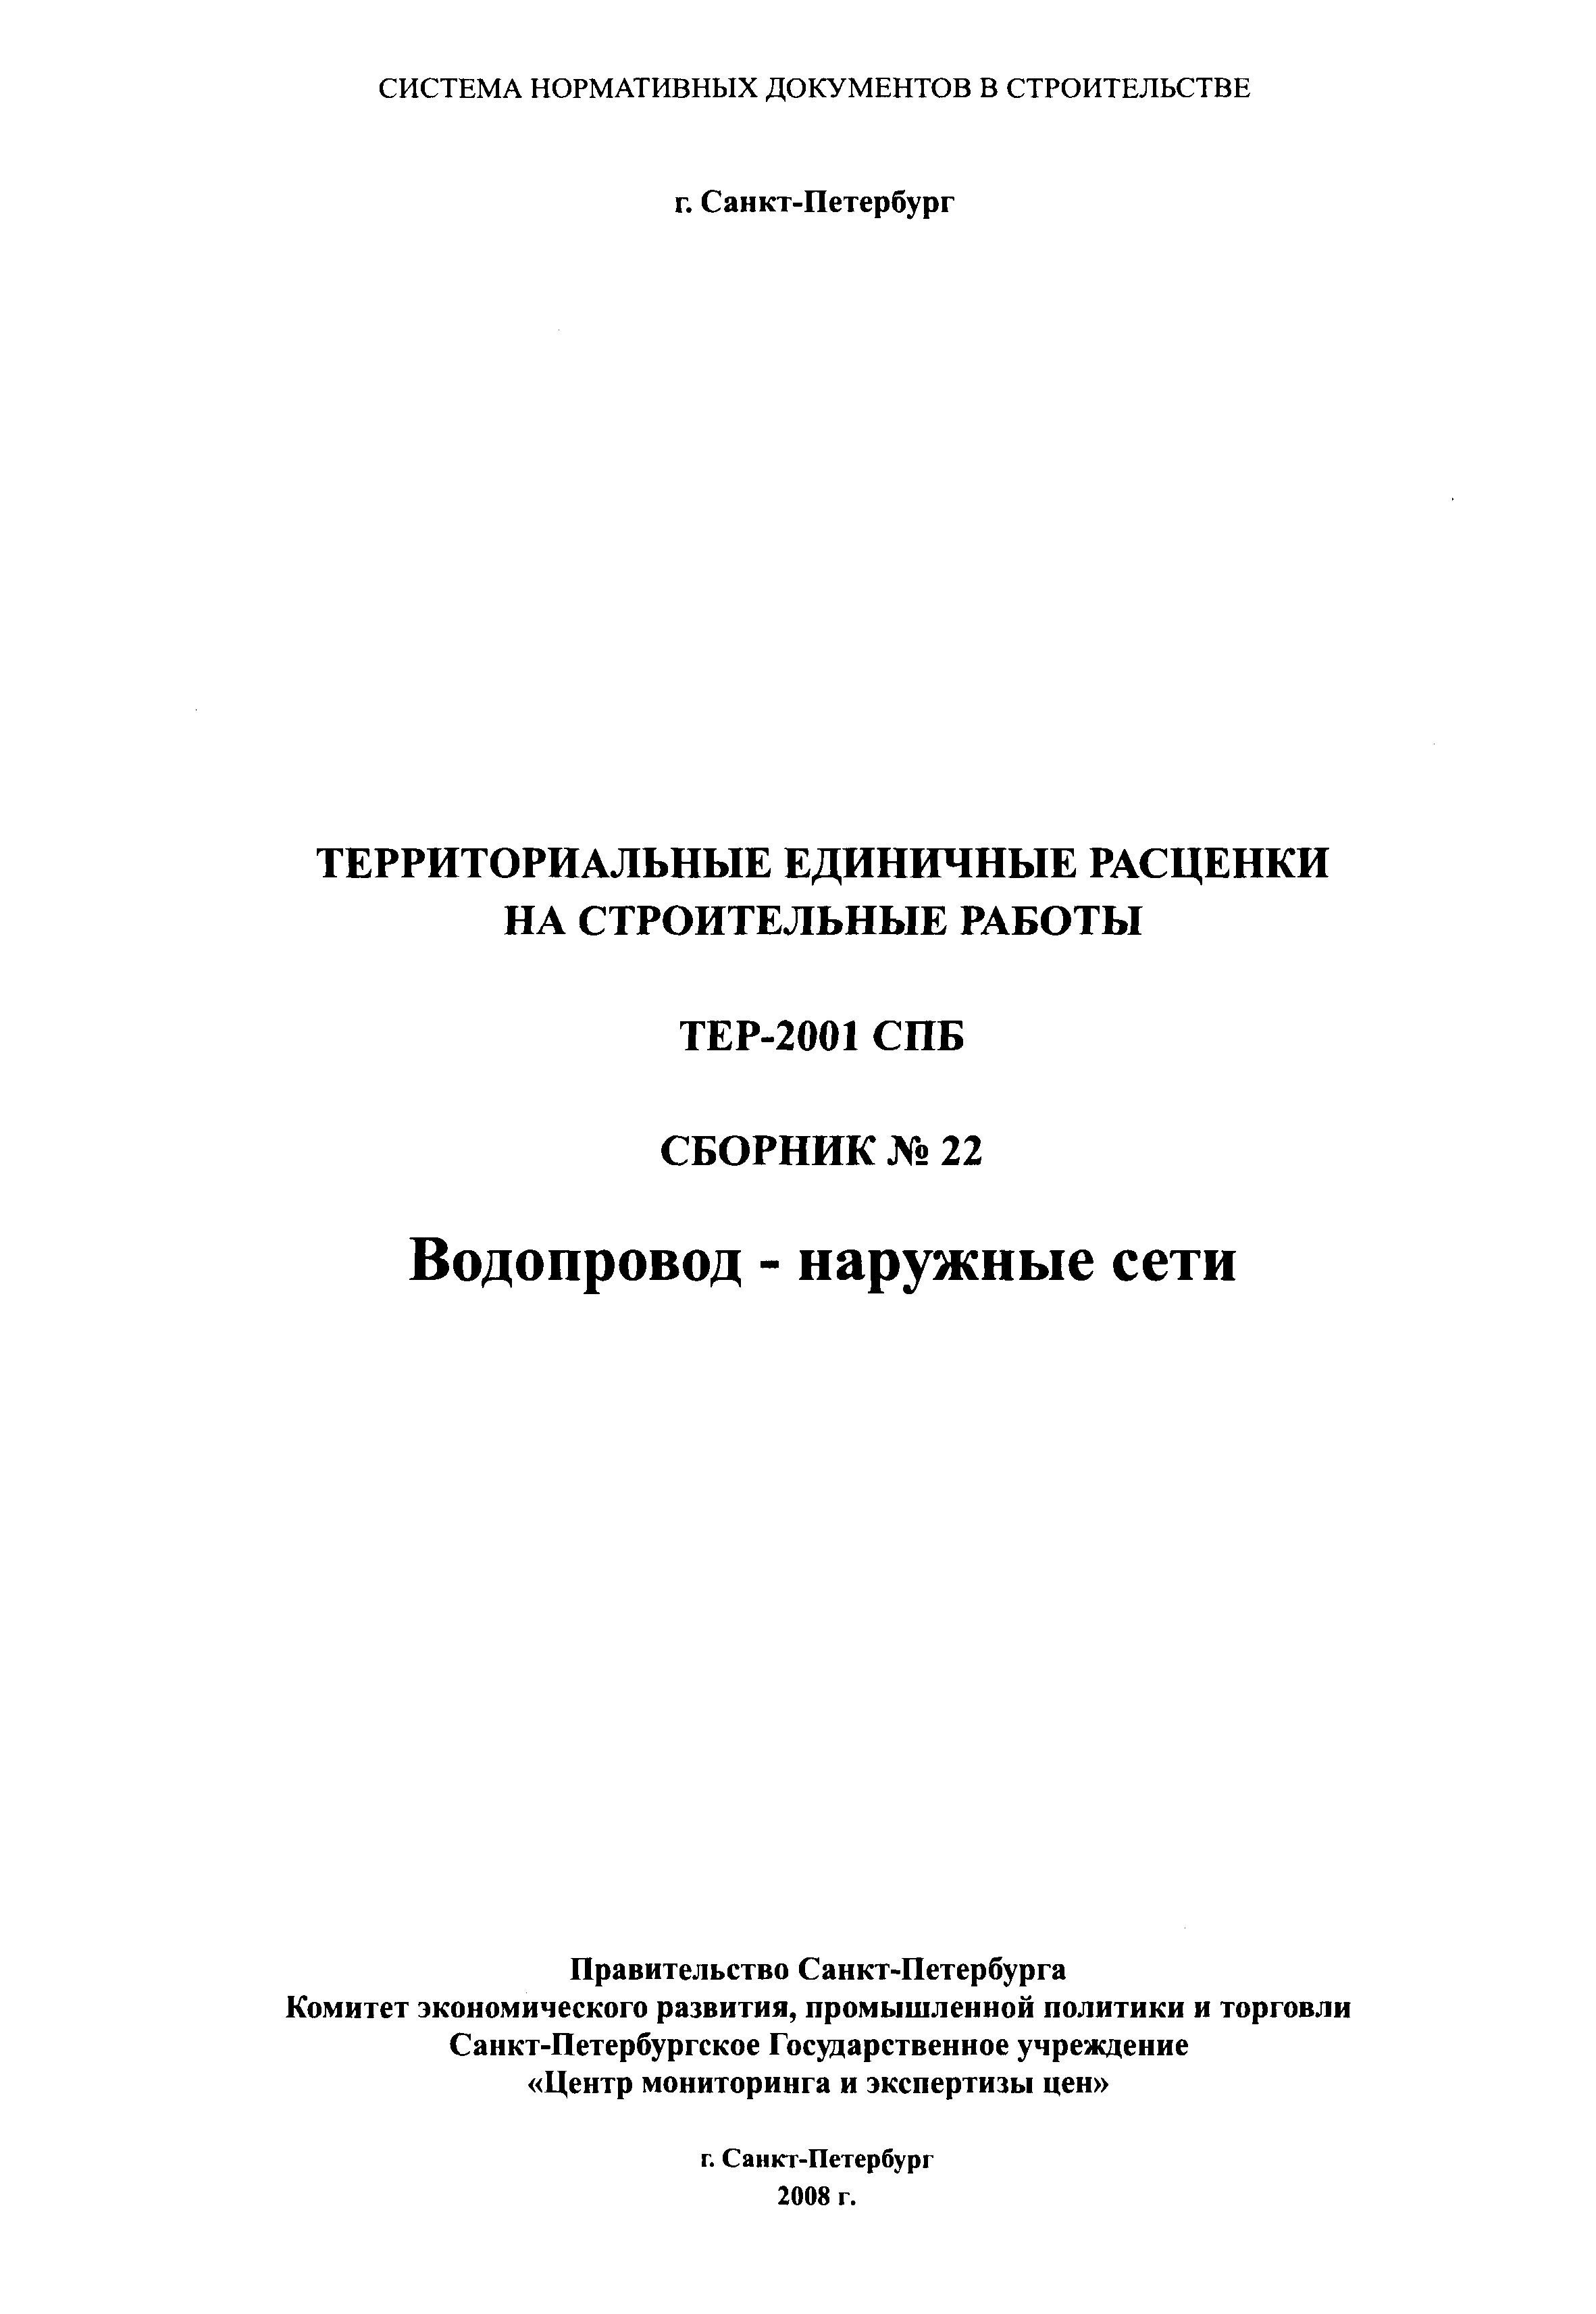 ТЕР 2001-22 СПб